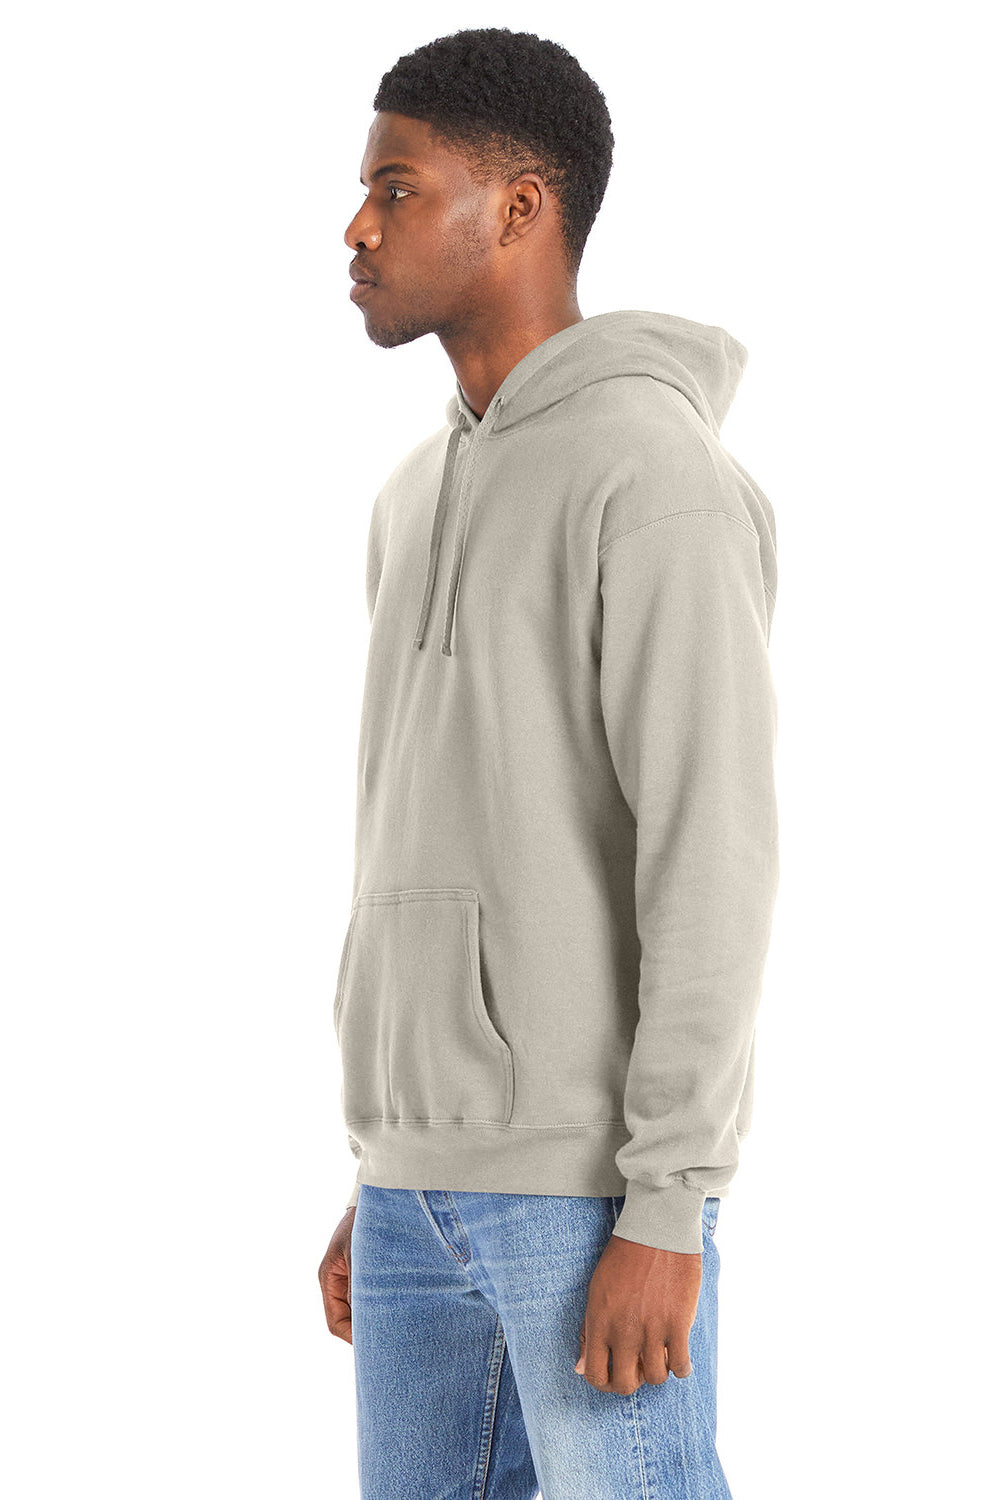 Hanes RS170 Mens Perfect Sweats Hooded Sweatshirt Hoodie Sand 3Q